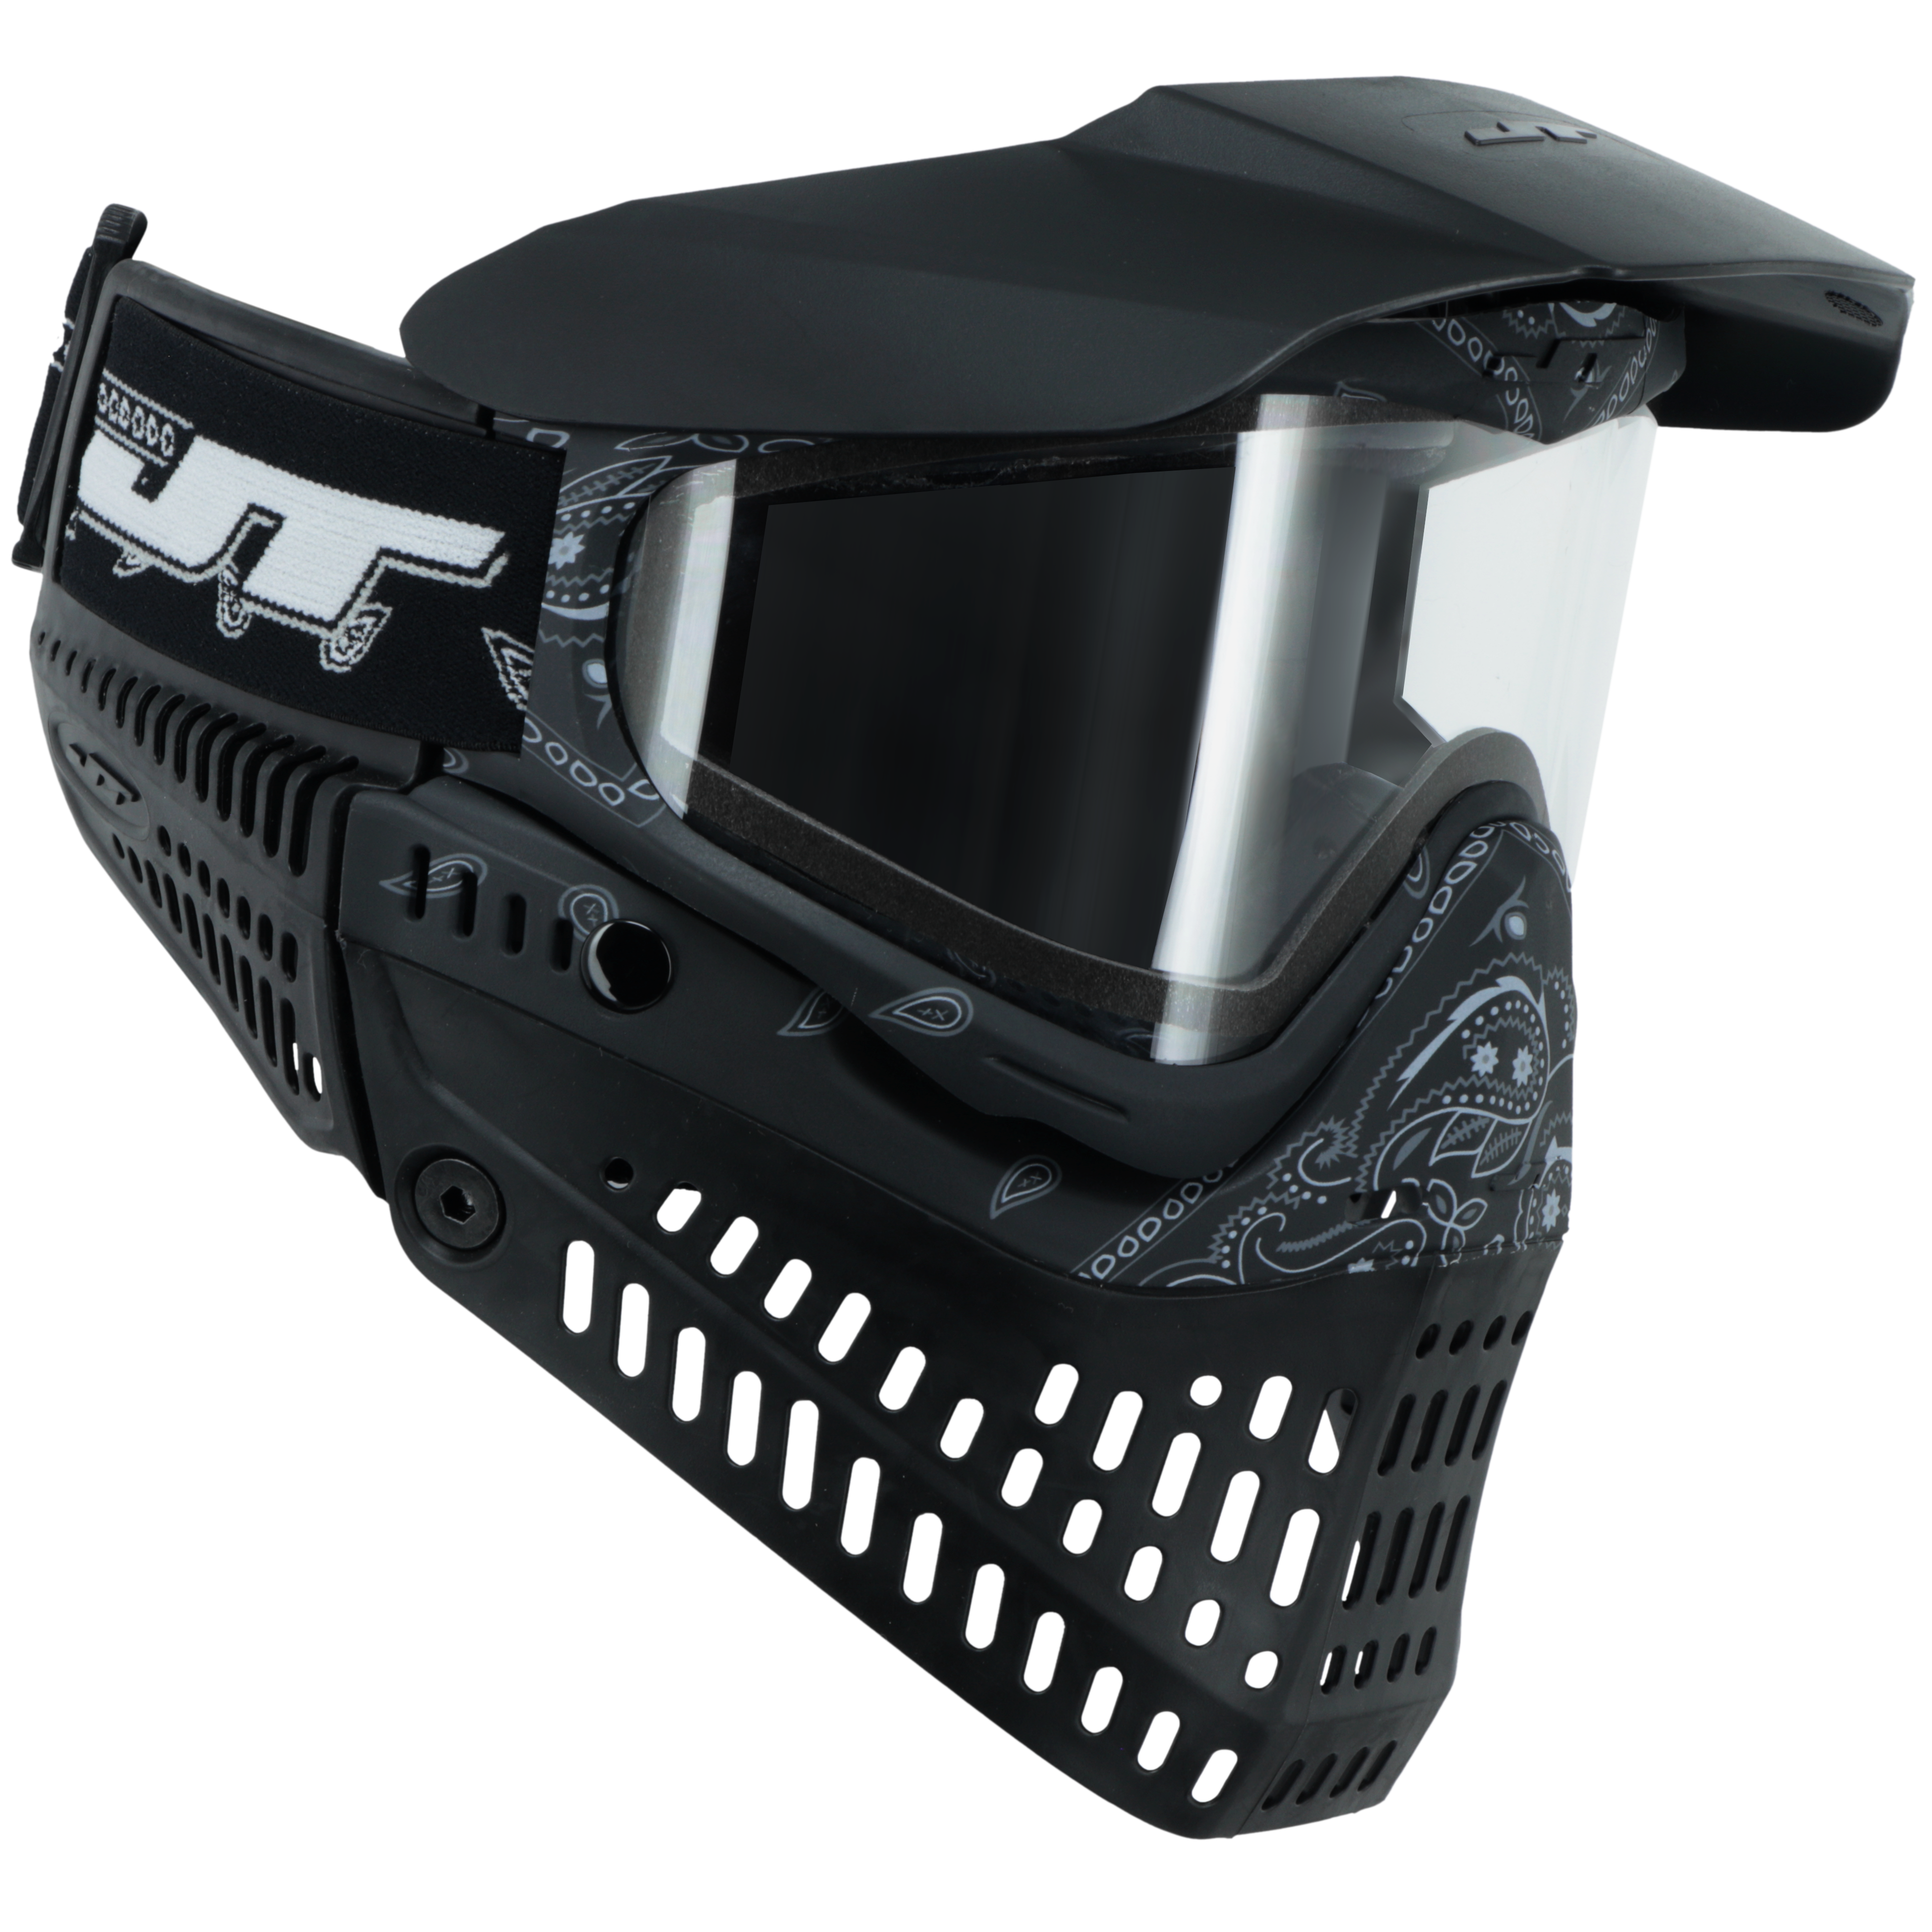 JT Proflex Paintball Mask - LE Bandana Series - Black w/ Clear & Smoke Lens